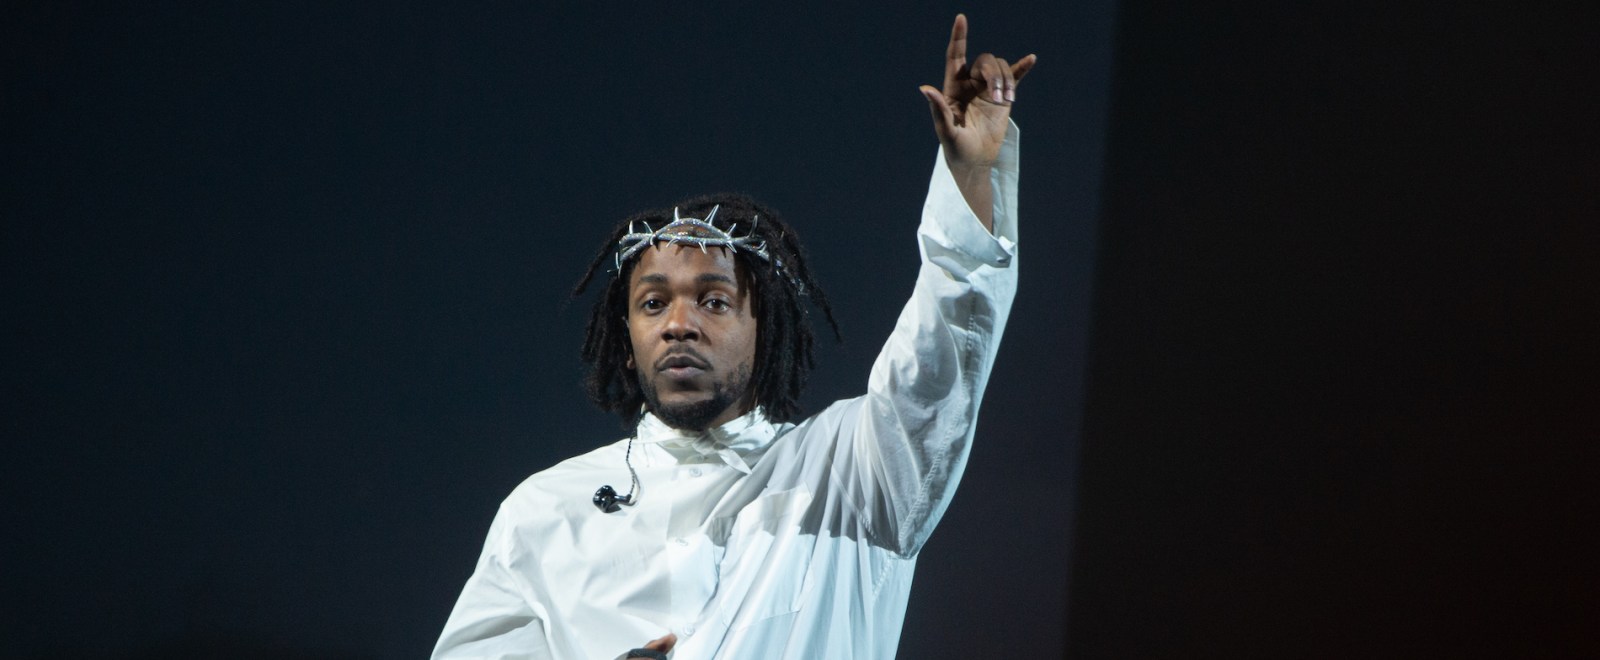 Kendrick Lamar announces 'Big Steppers' world tour starting July